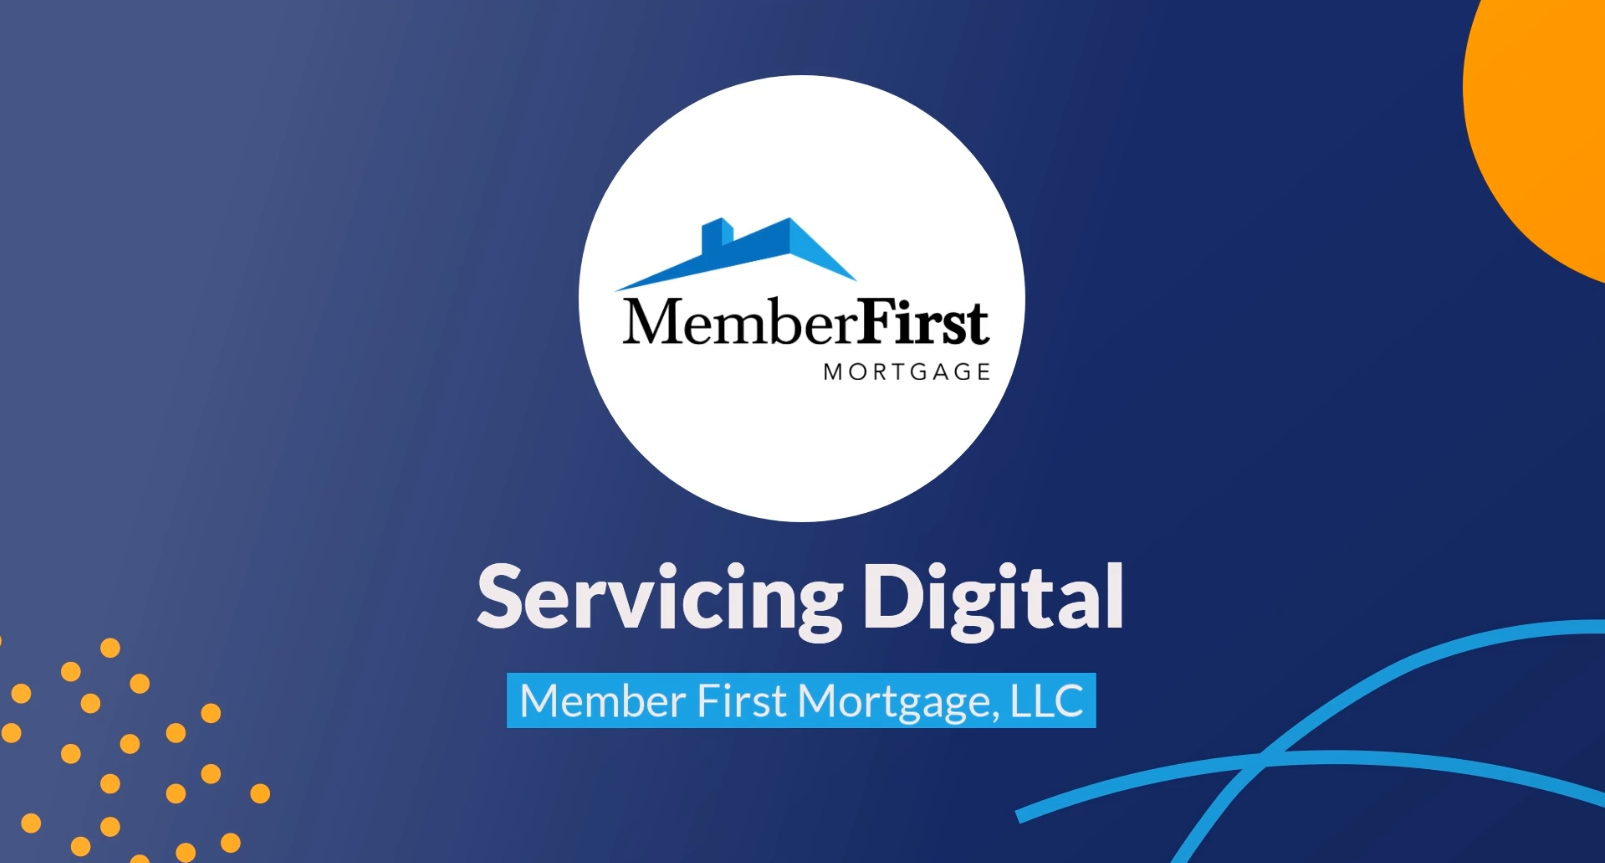 Servicing Digital & Registering Your Account